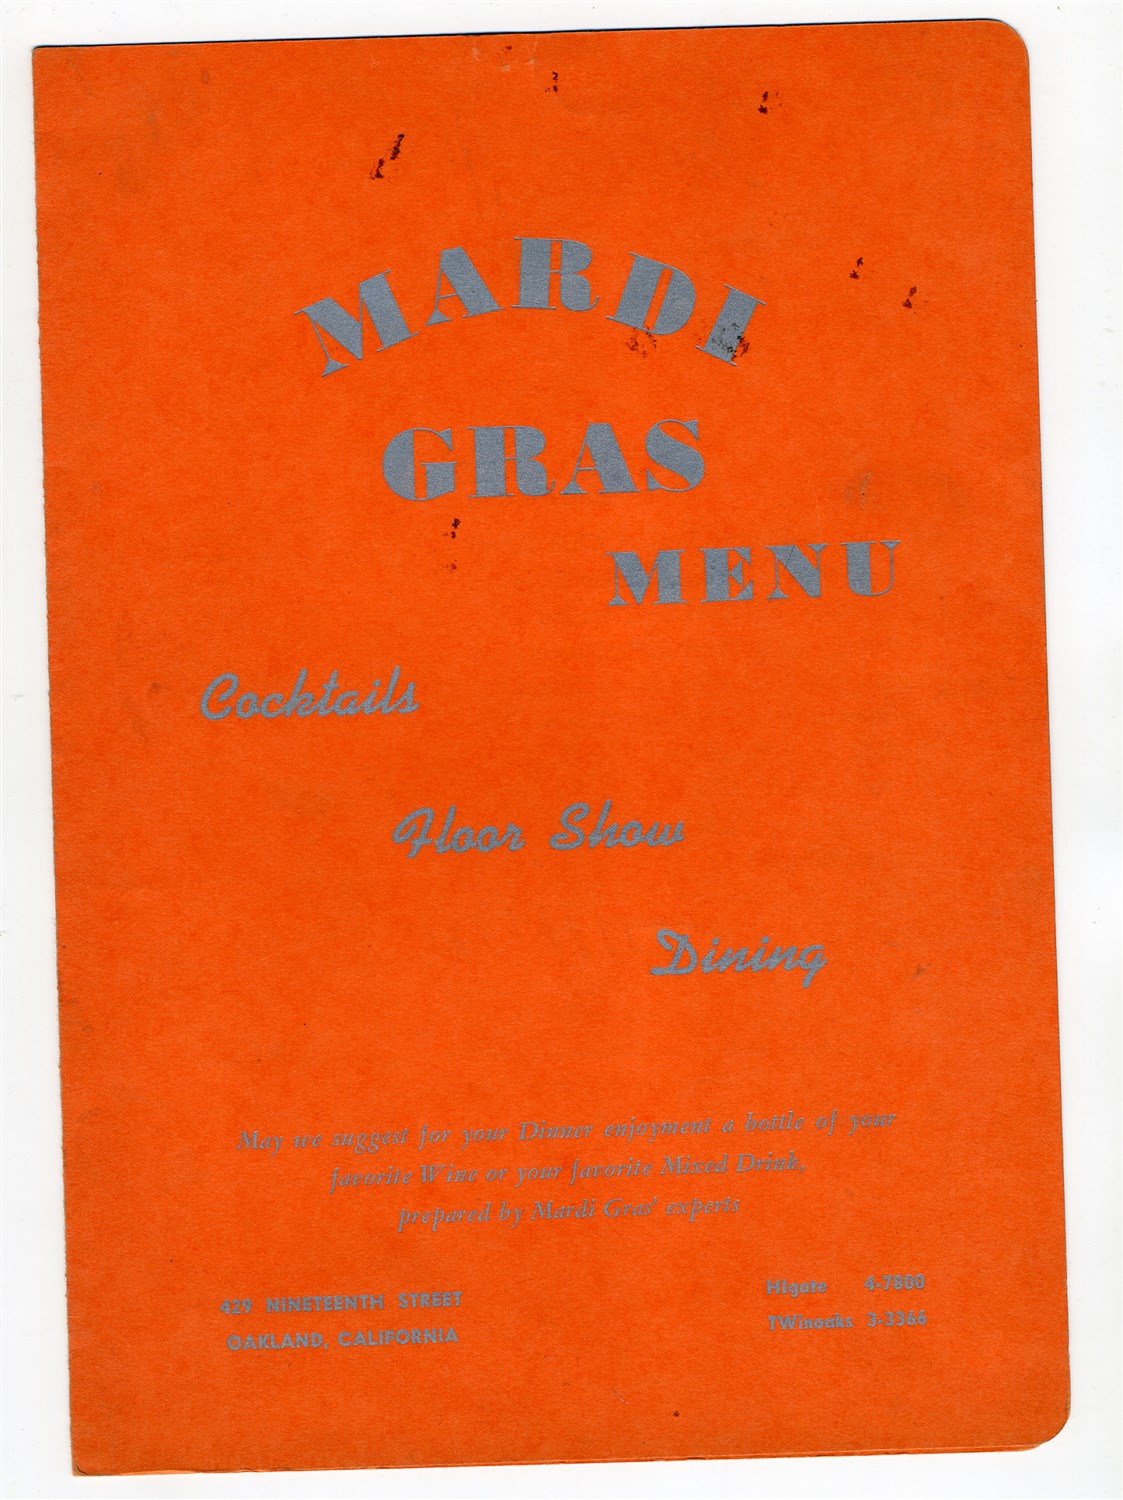 Mardi Gras Menu Oakland California 1940s Floor Show Dining Cocktails